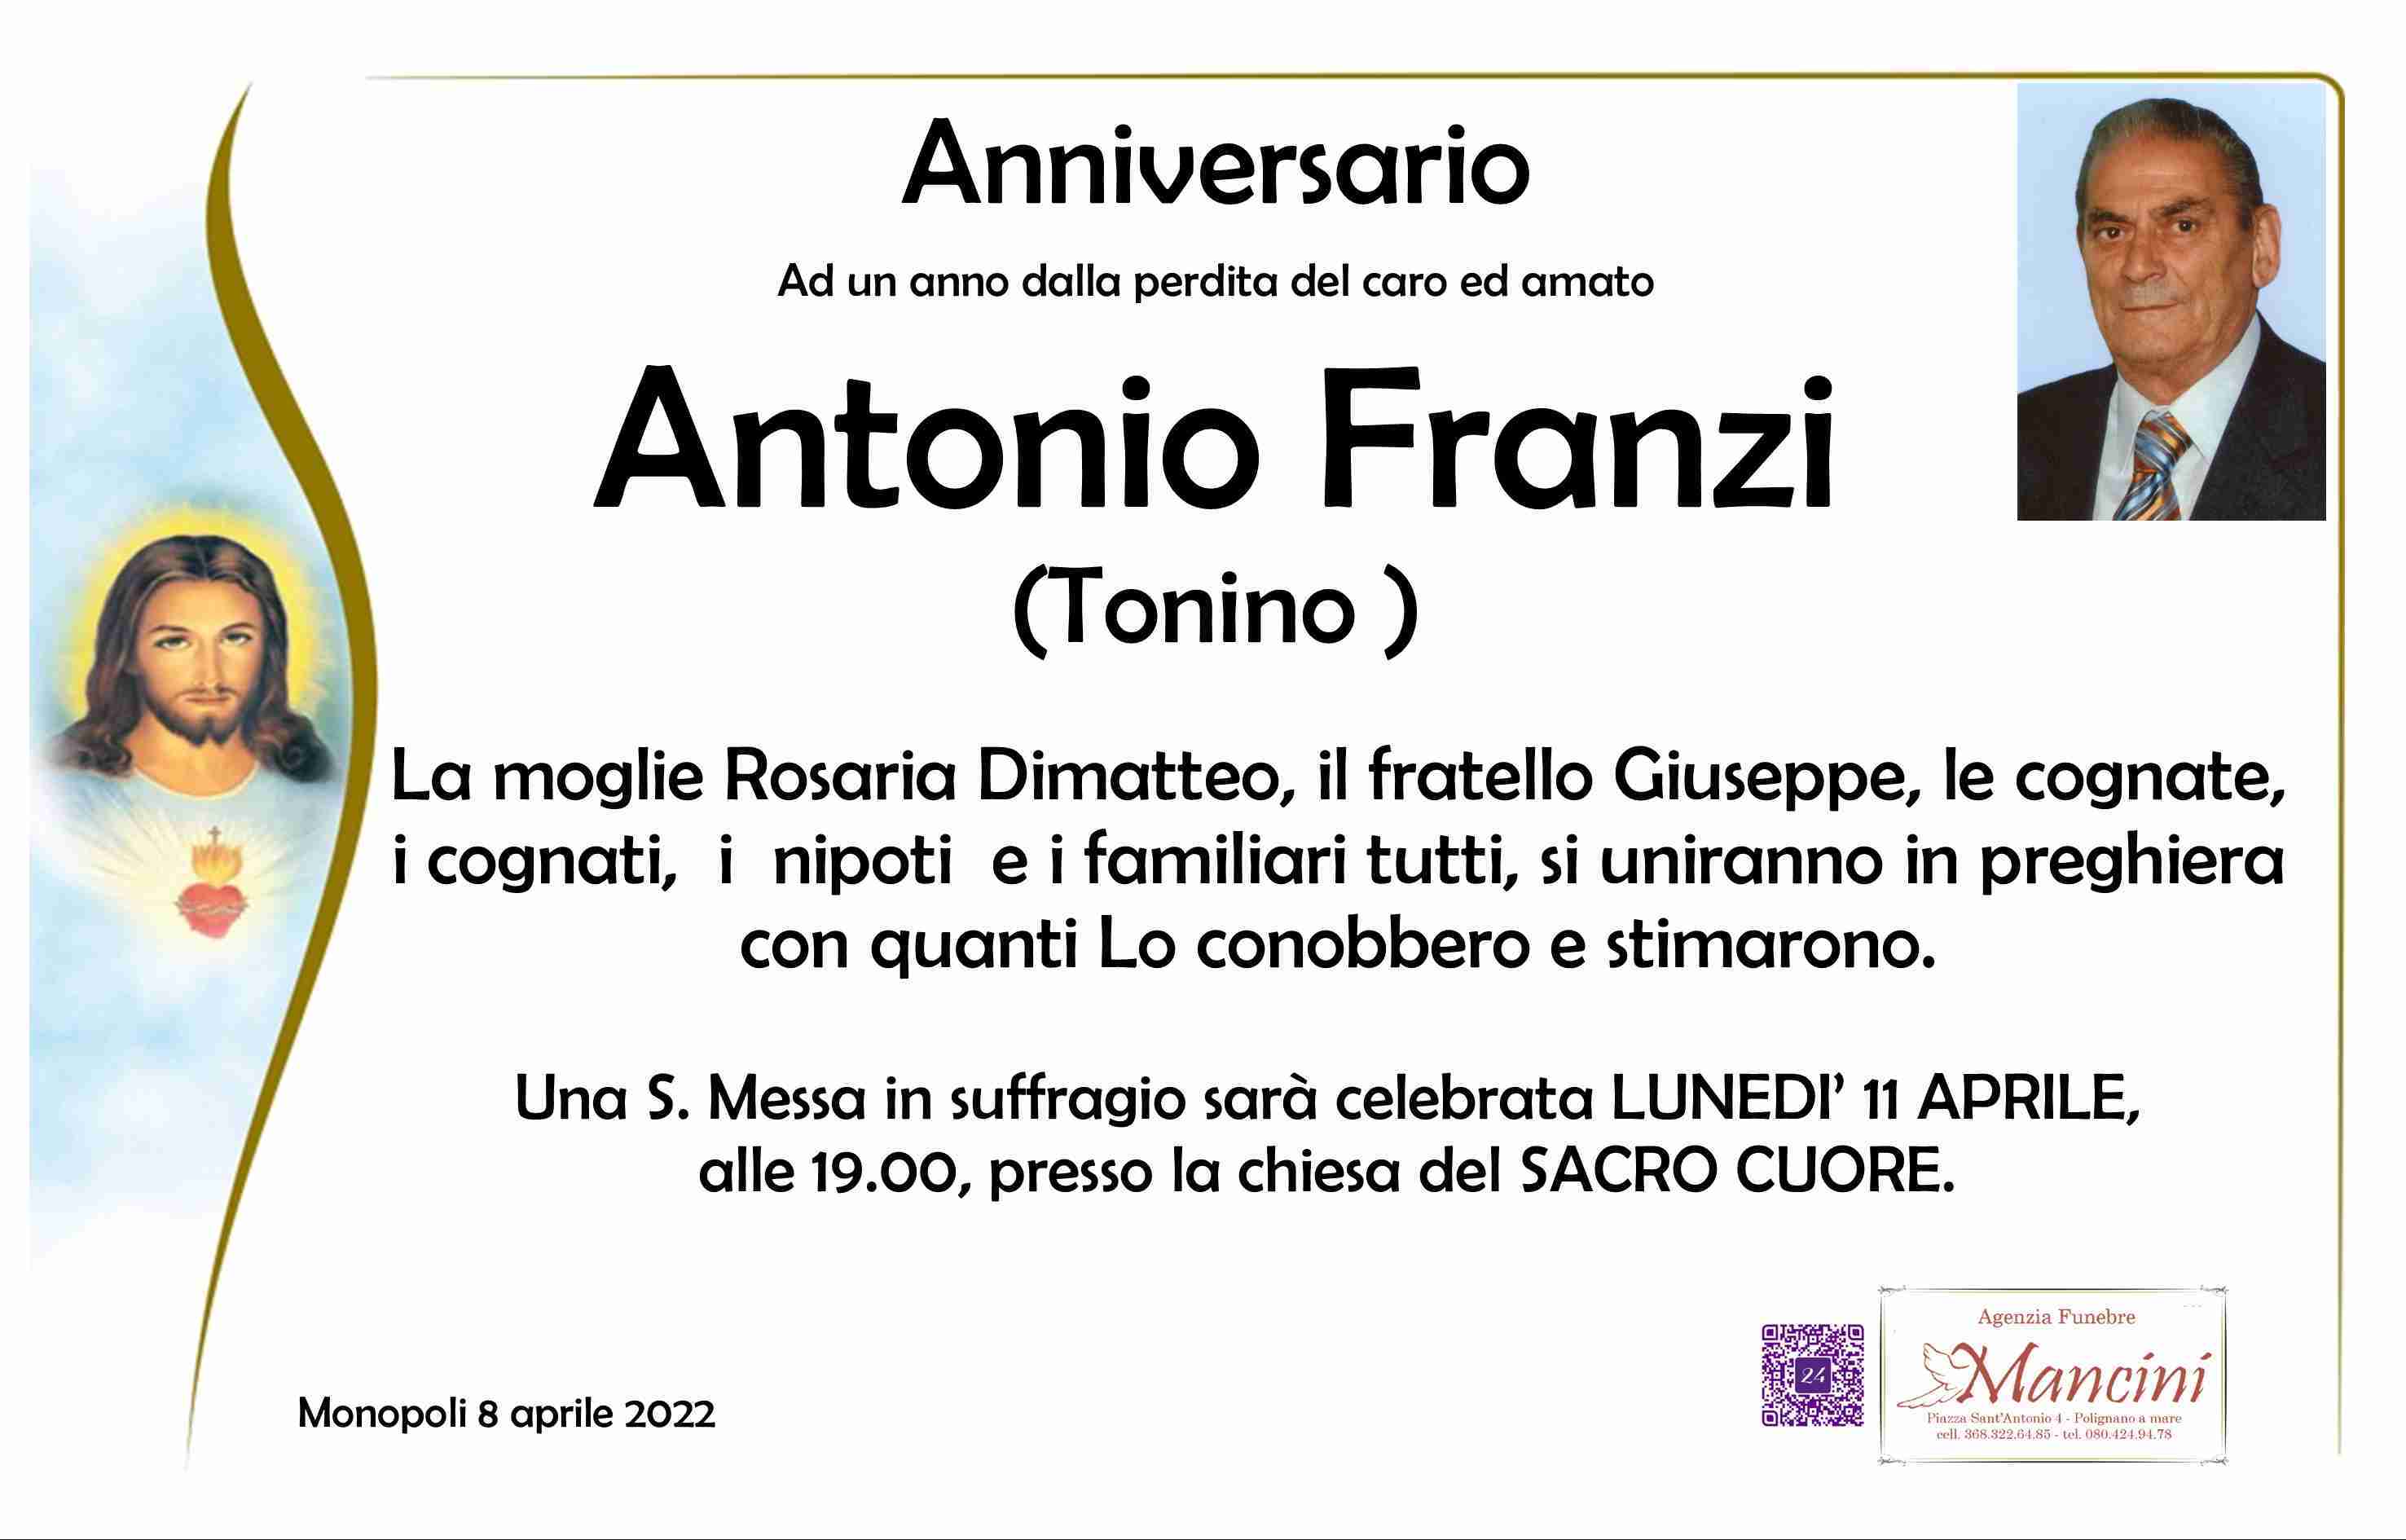 Antonio Franzi